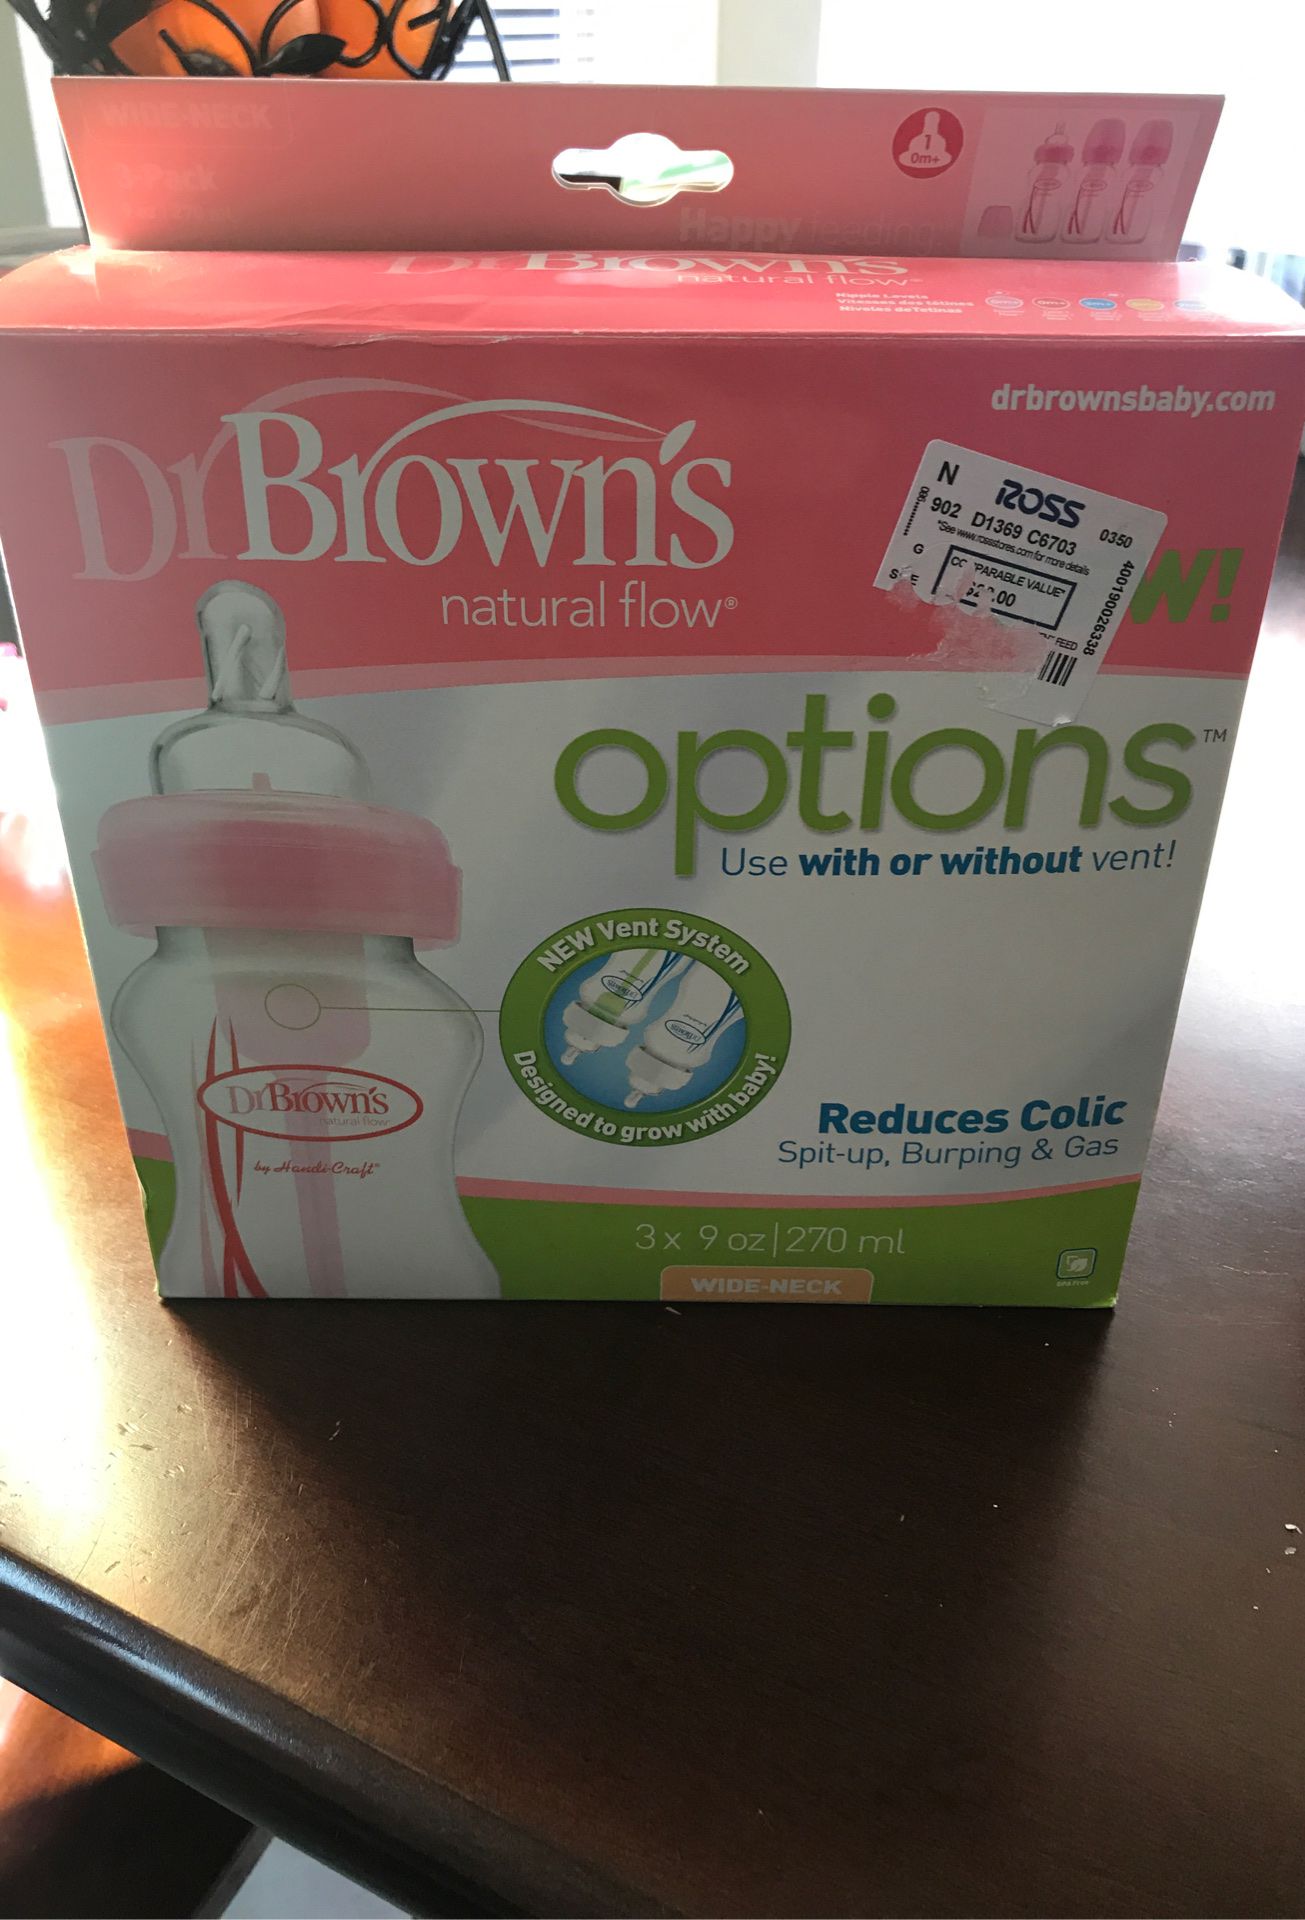 Drs browns bottles